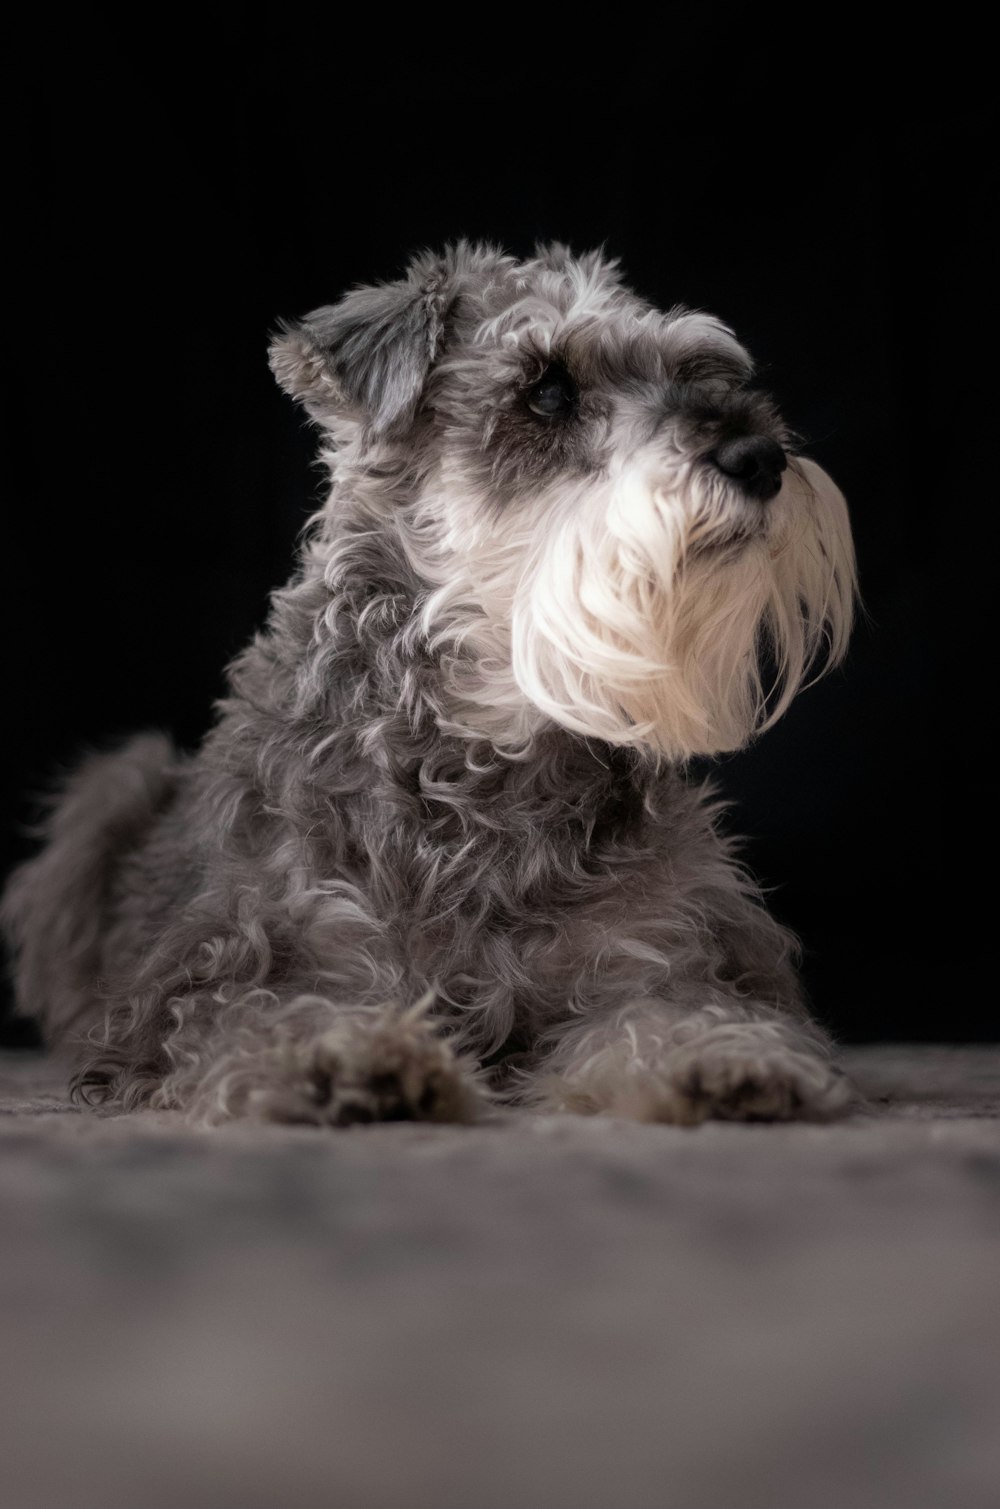 long-coated gray and white dog